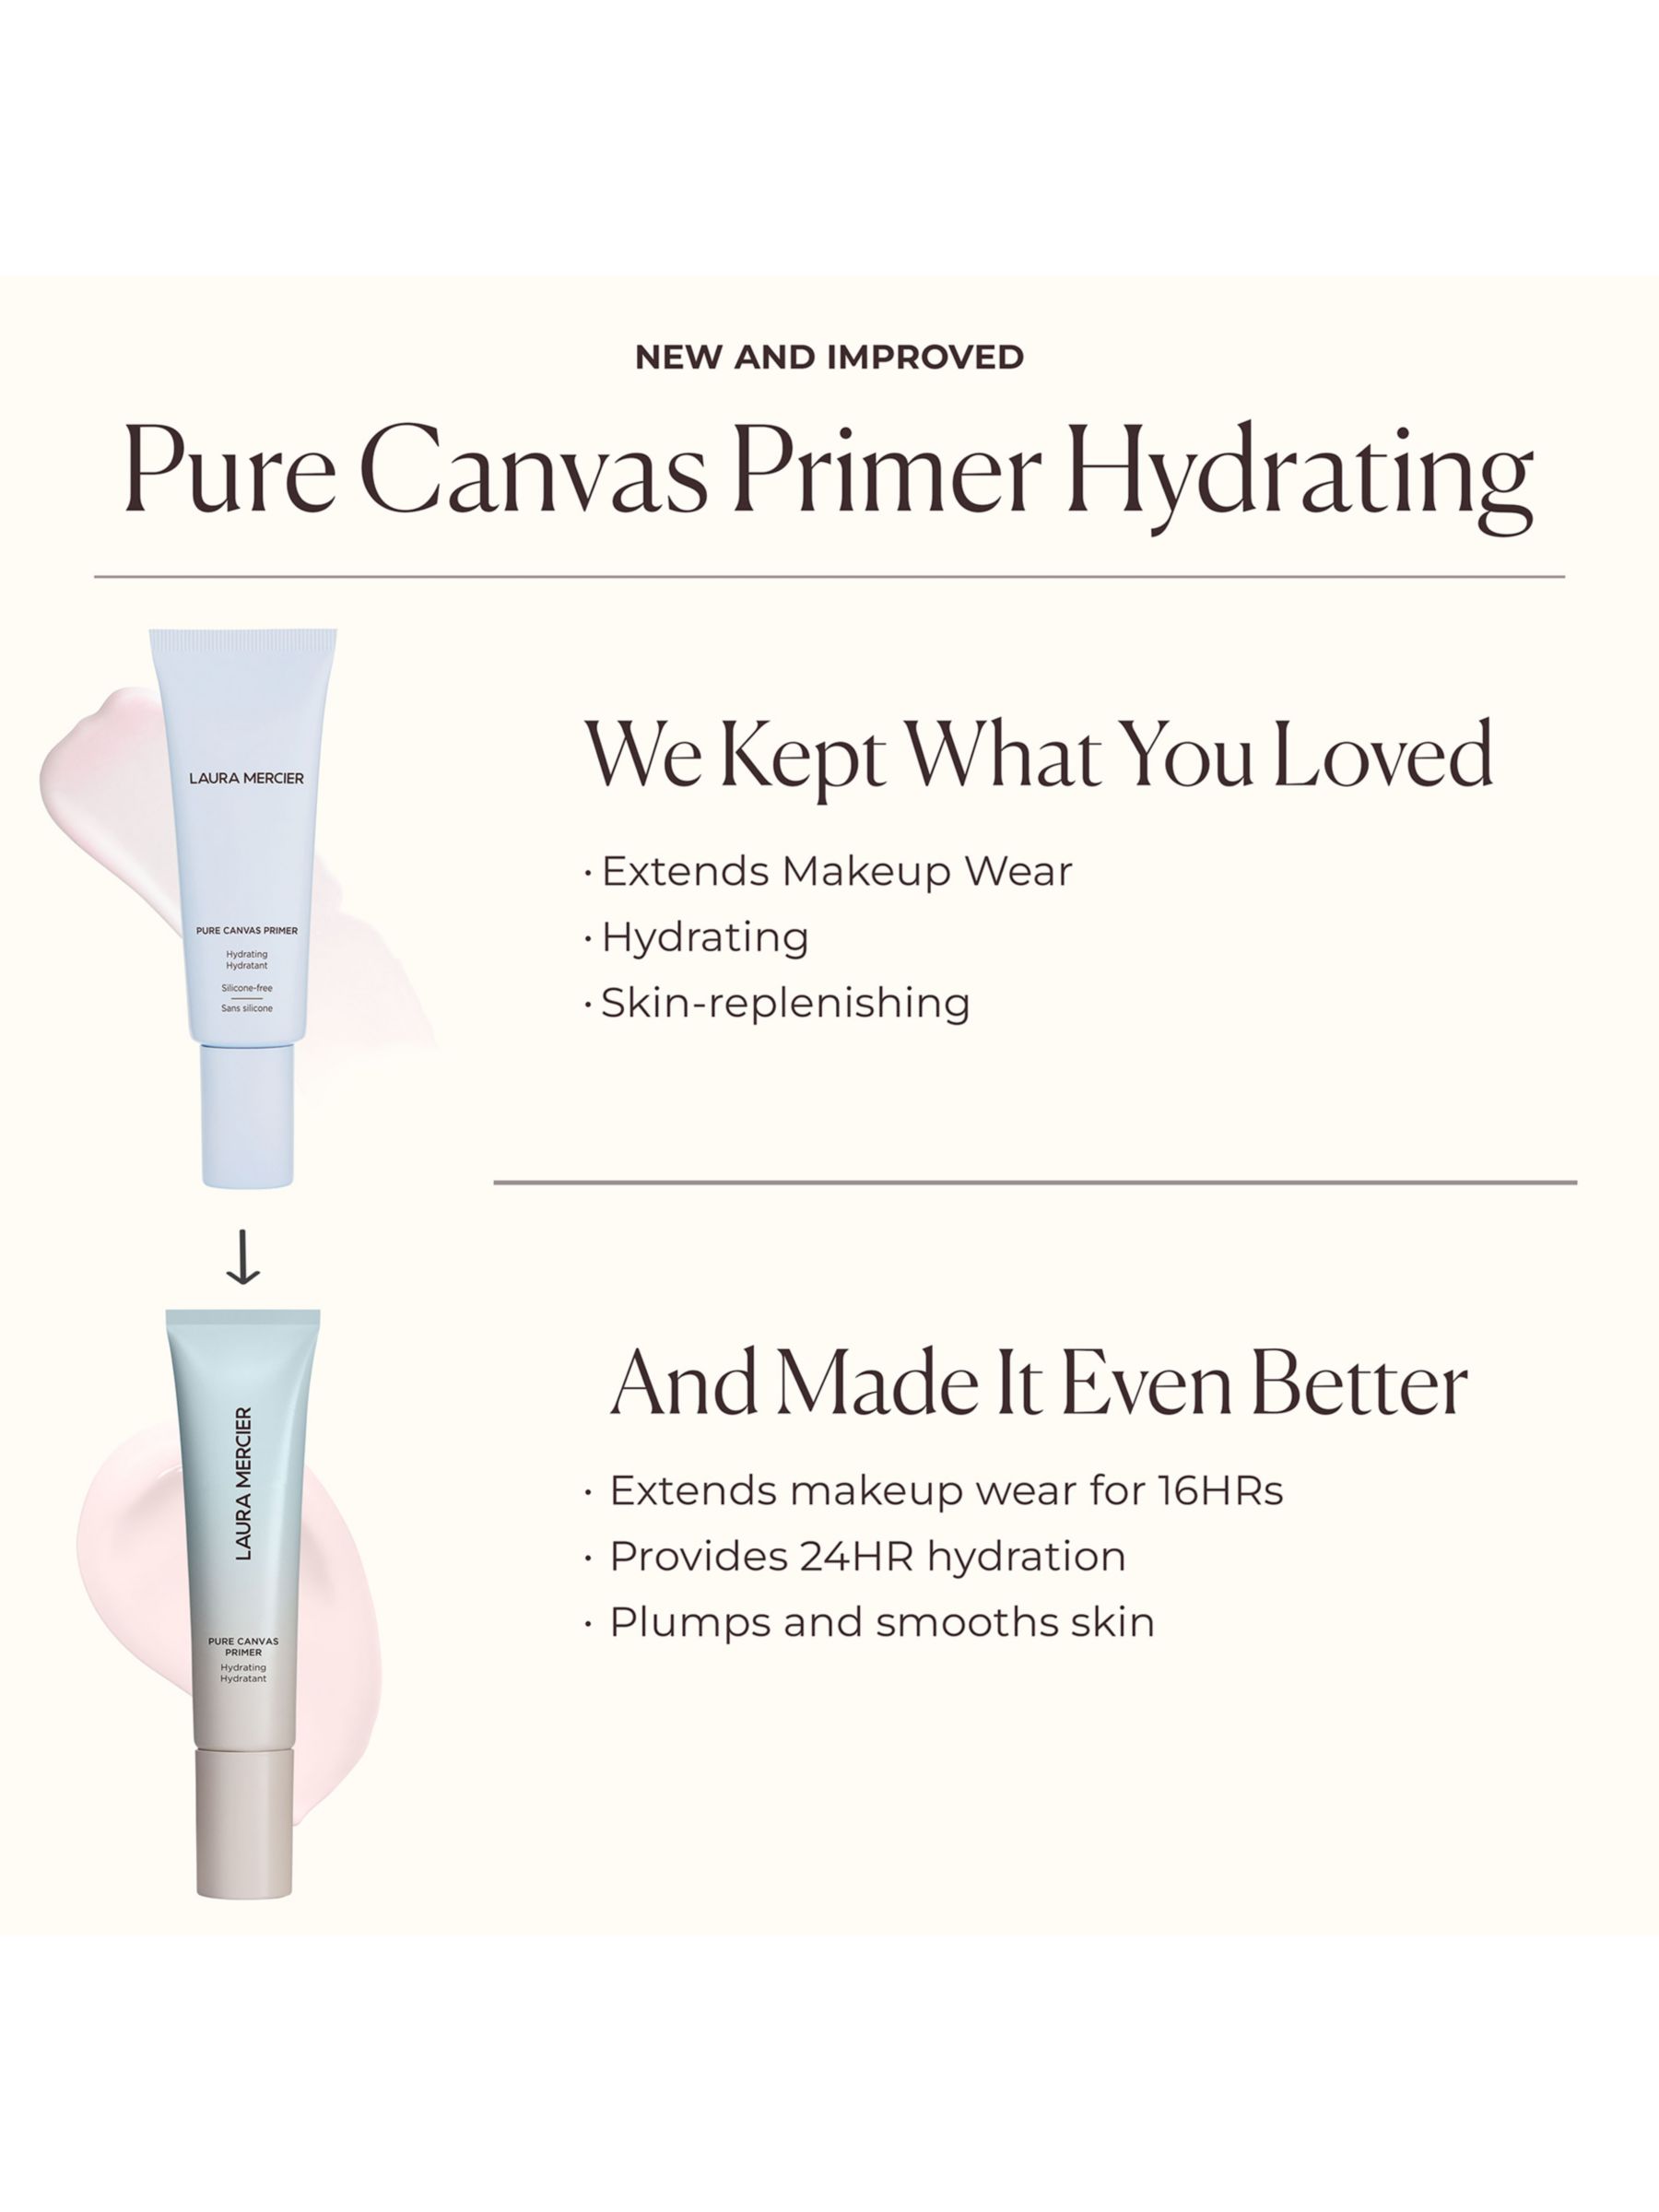 Laura Mercier Pure Canvas Primer Hydrating, 30ml